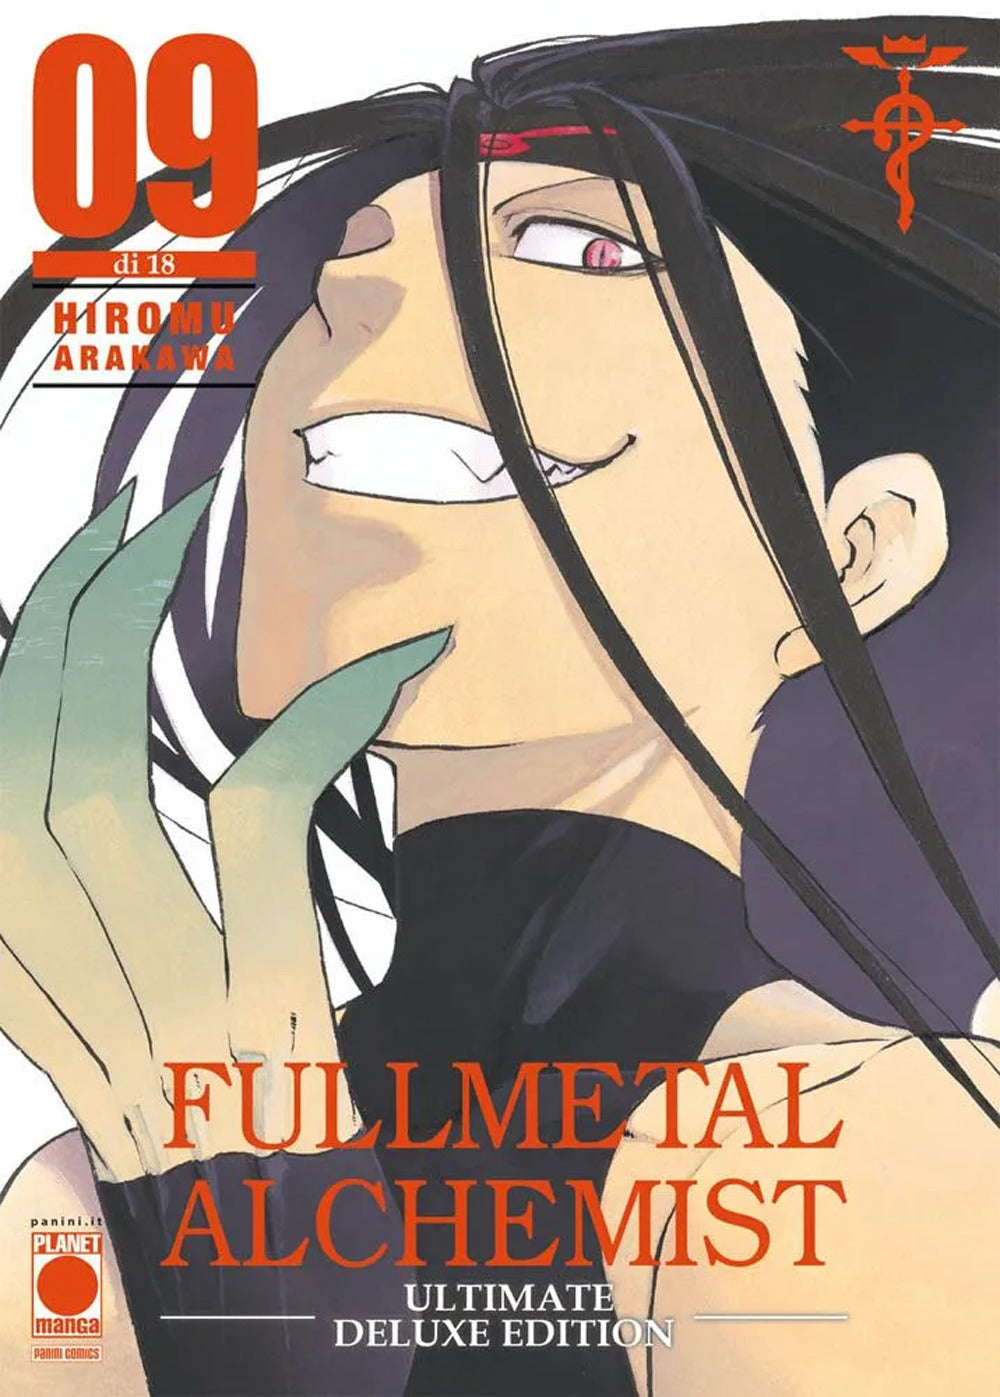 Fullmetal alchemist. Ultimate deluxe edition. Vol. 9.